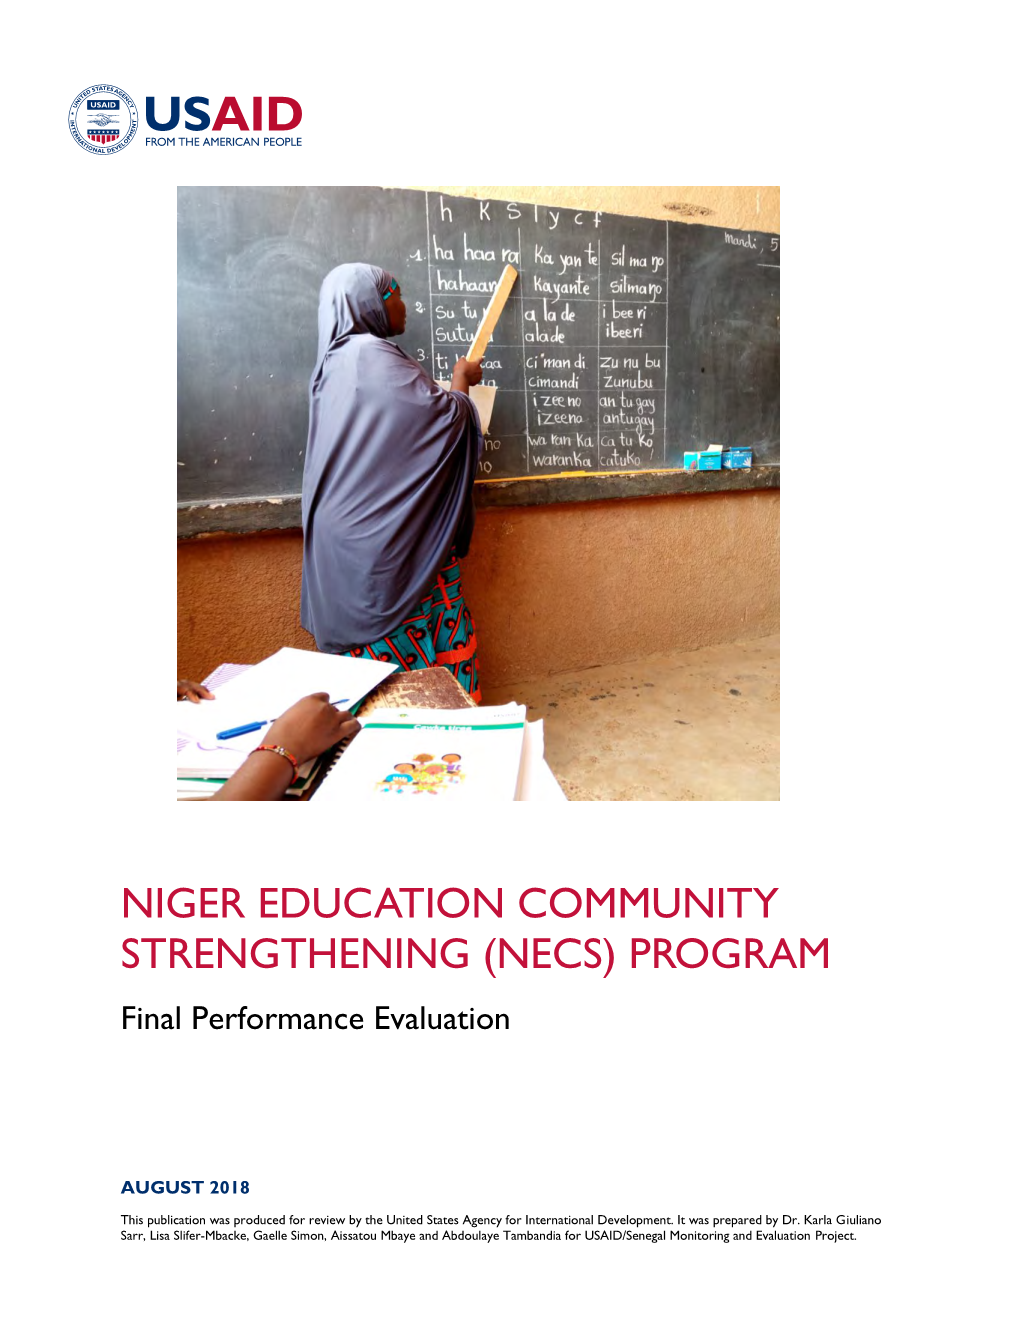 NIGER EDUCATION COMMUNITY STRENGTHENING (NECS) PROGRAM Final Performance Evaluation